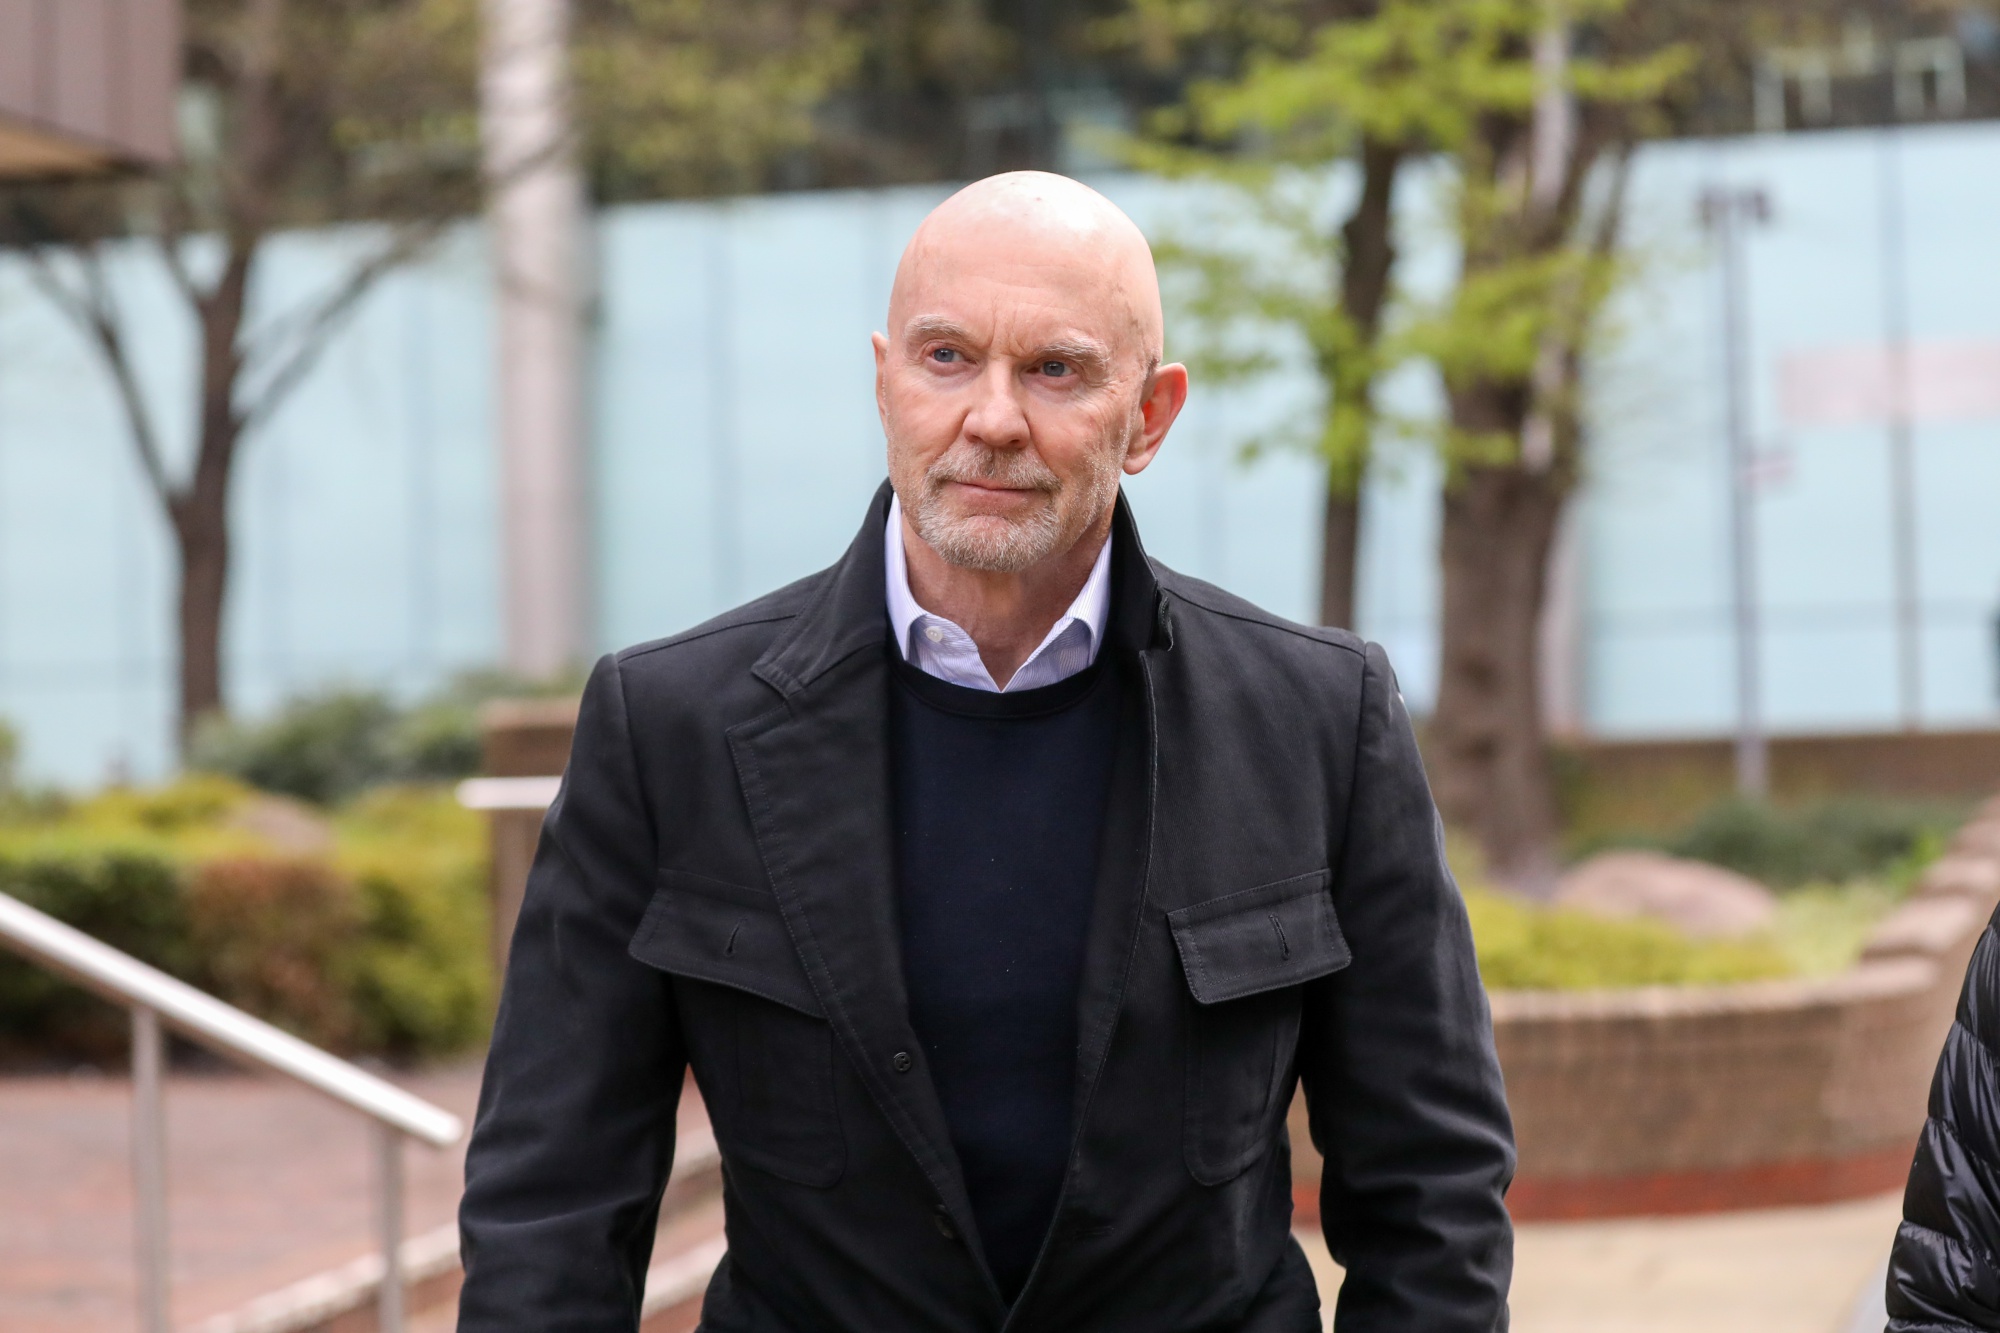 Roger Jenkins leaves Southwark Crown Court in London, in April 2019.